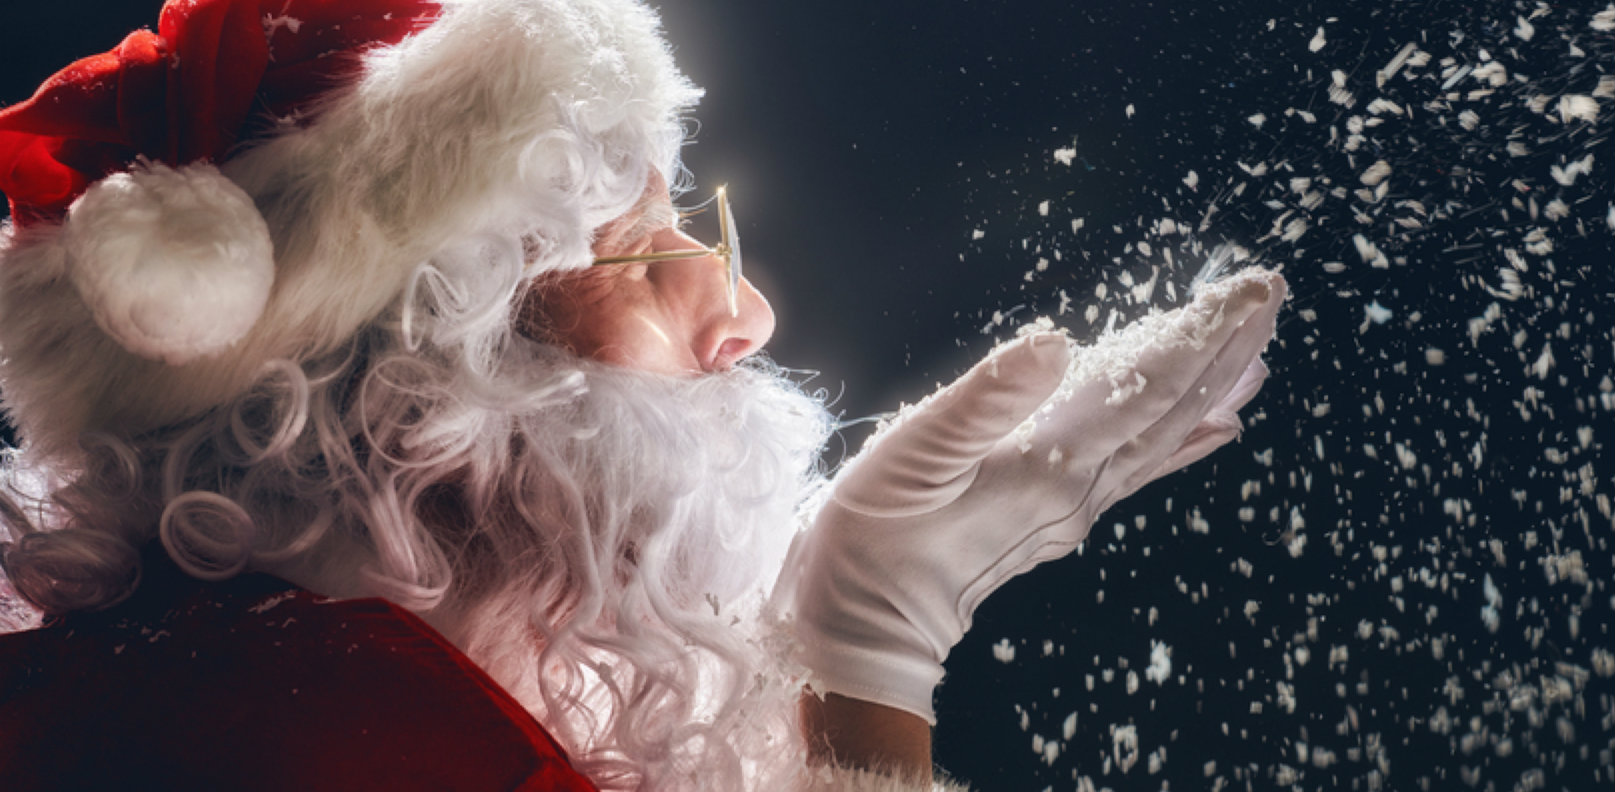 Santa blowing snow